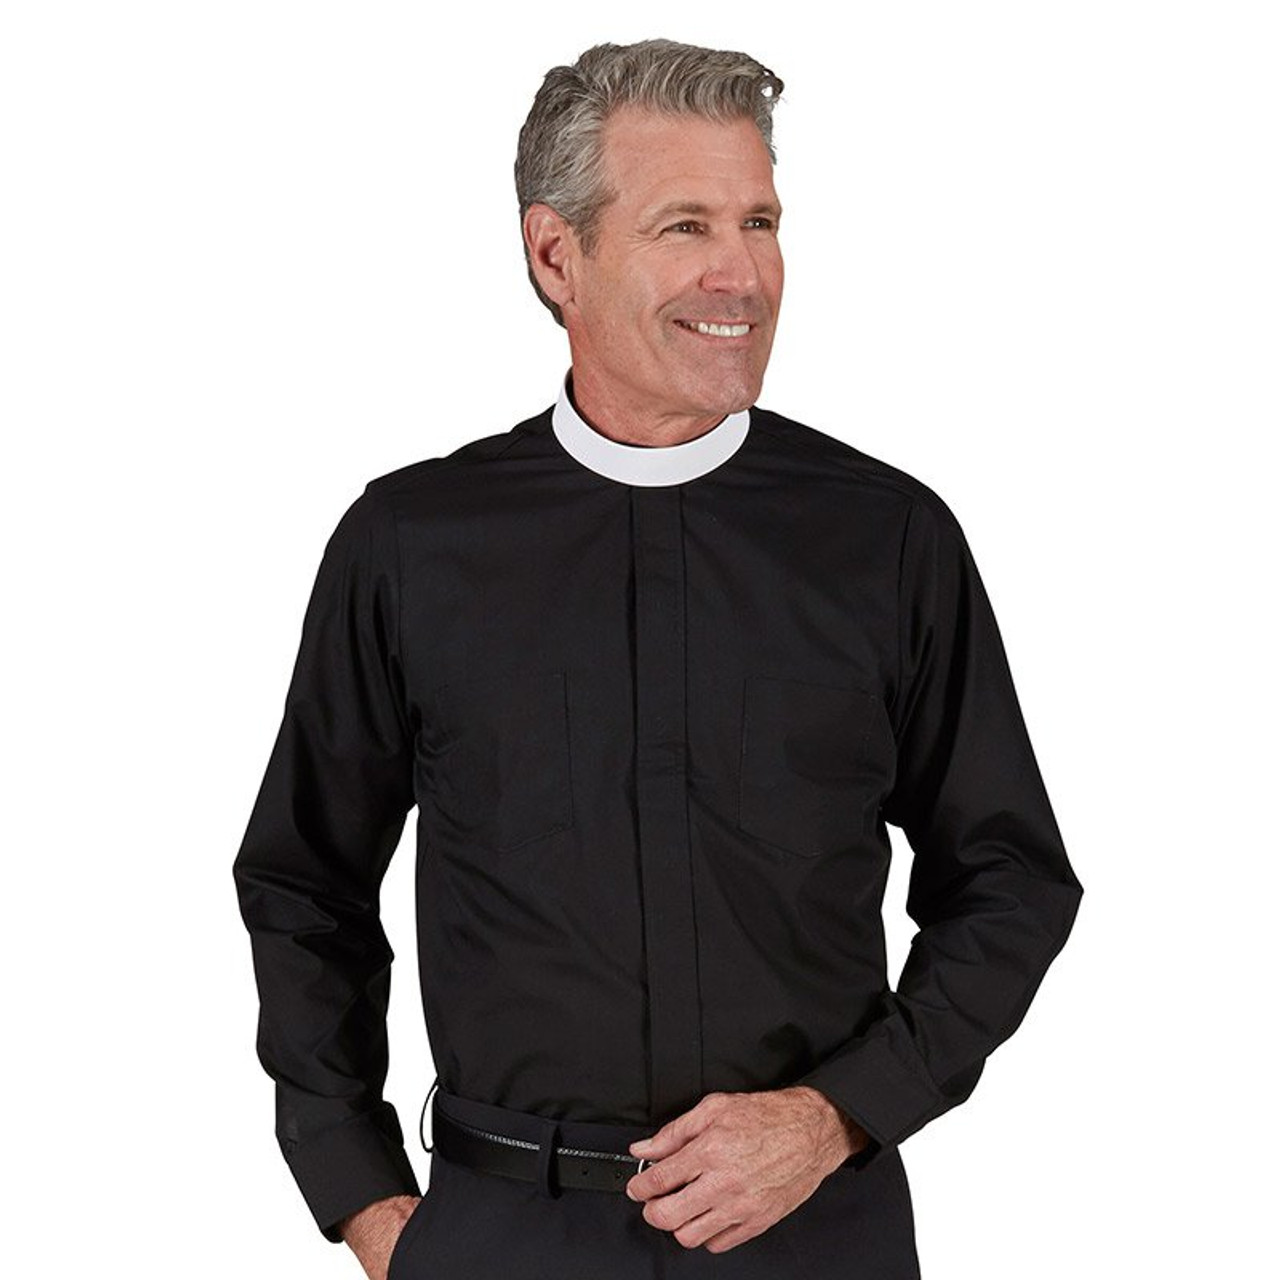 Clerical Shirt Neckband Collar Black Size 18-34/35